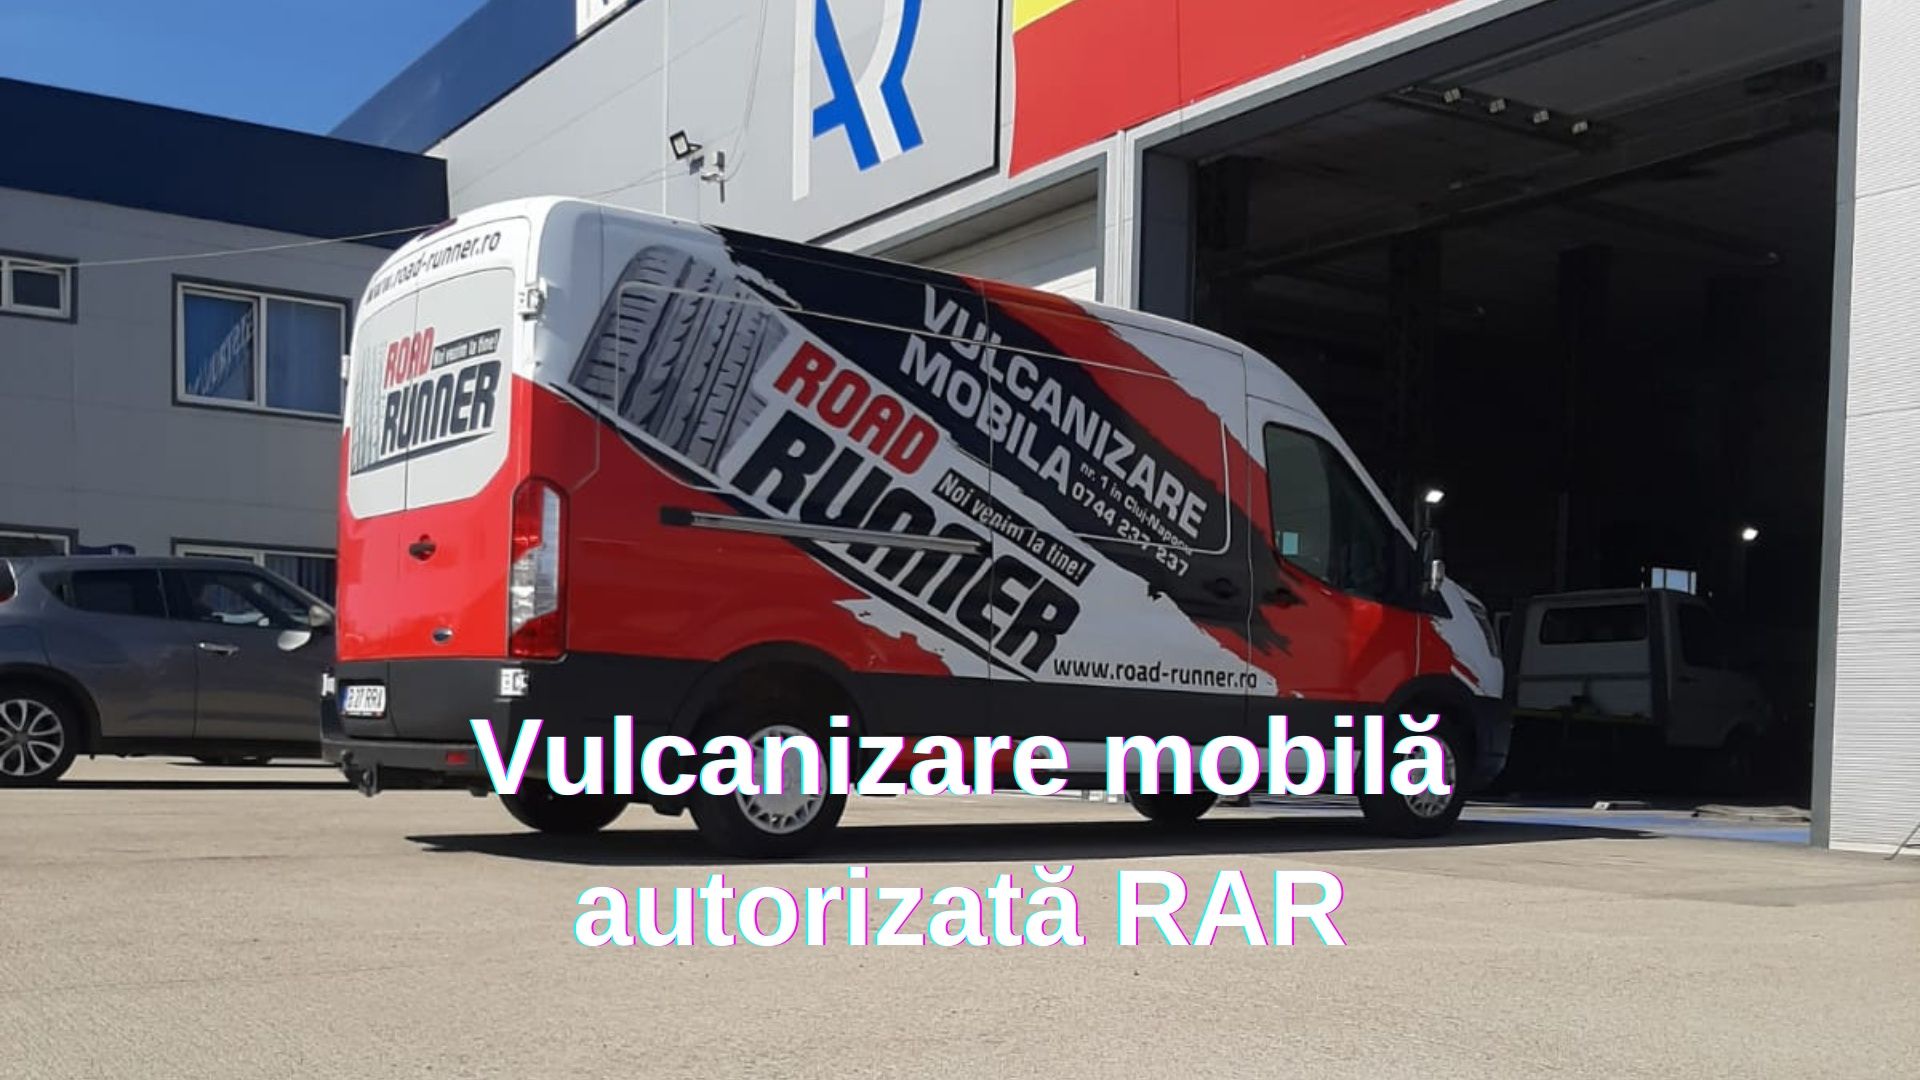 Road Runner Vulcanizare mobila cluj autorizata RAR